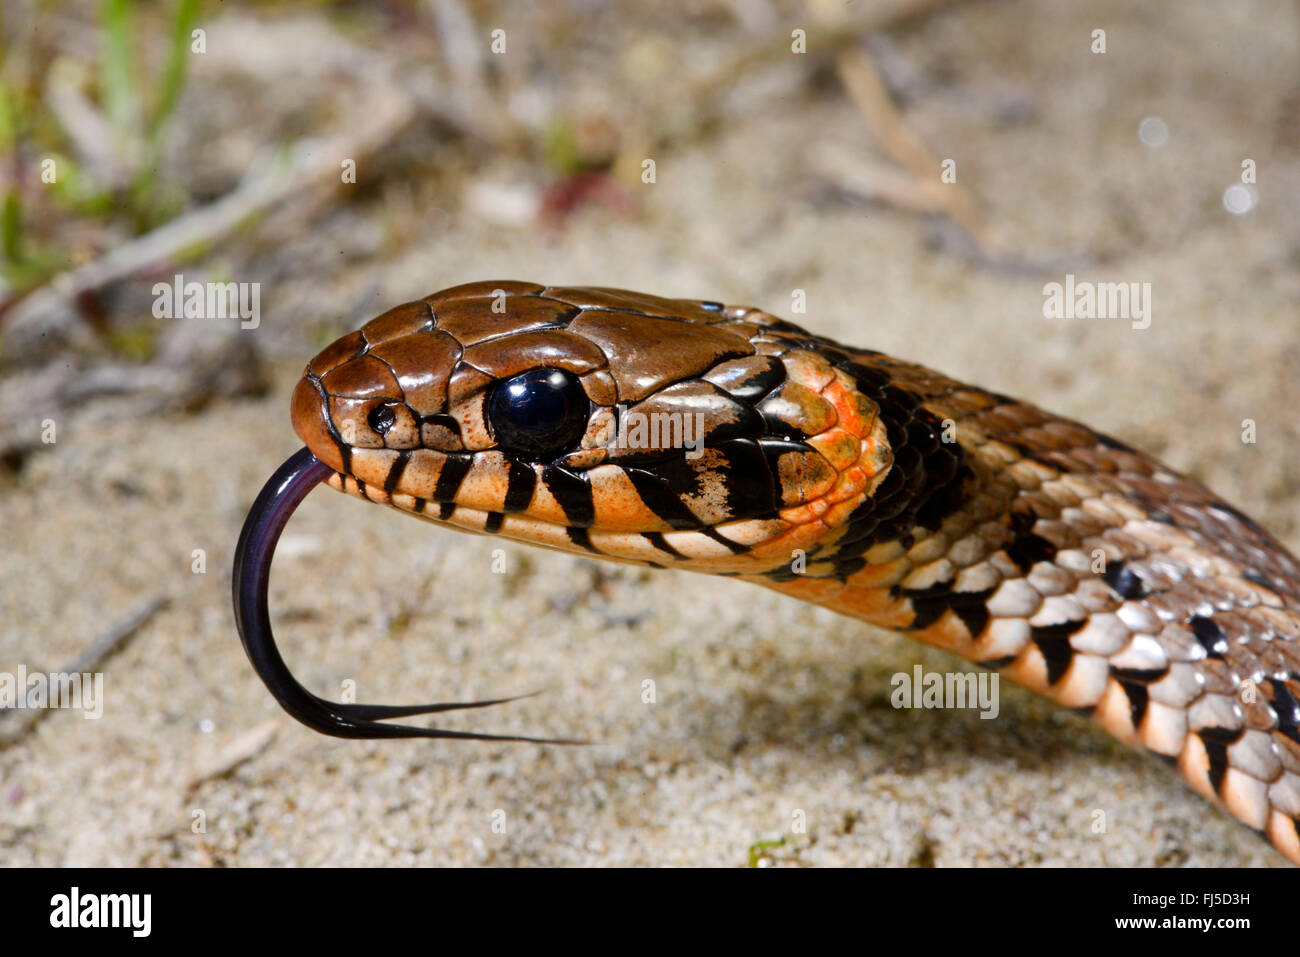 grass snake (Natrix natrix), portrait of a flicking grass snake with orange spots at the collar, Romania, Dobrudscha, Biosphaerenreservat Donaudelta Stock Photo